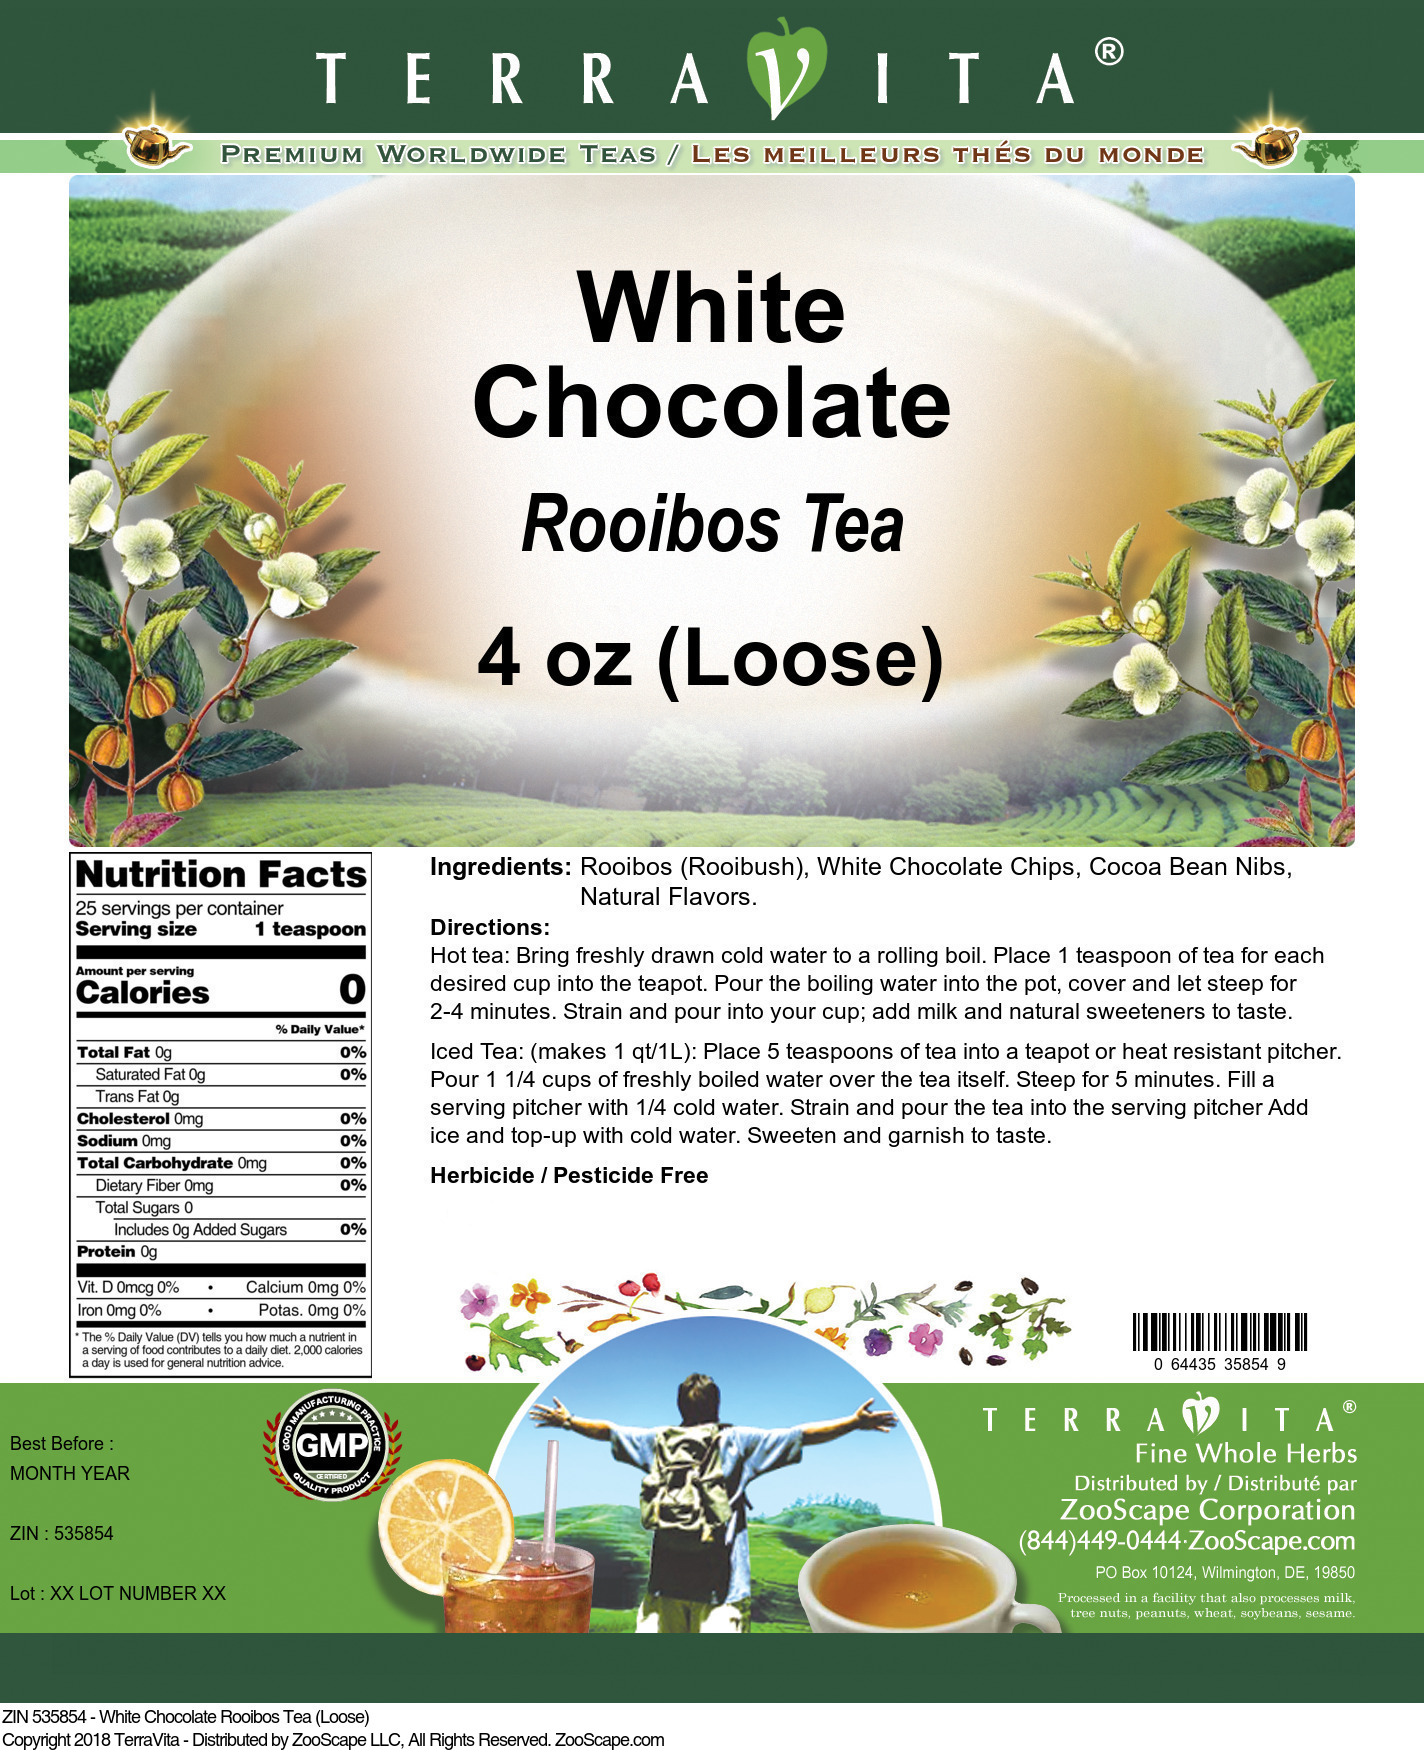 White Chocolate Rooibos Tea (Loose) - Label